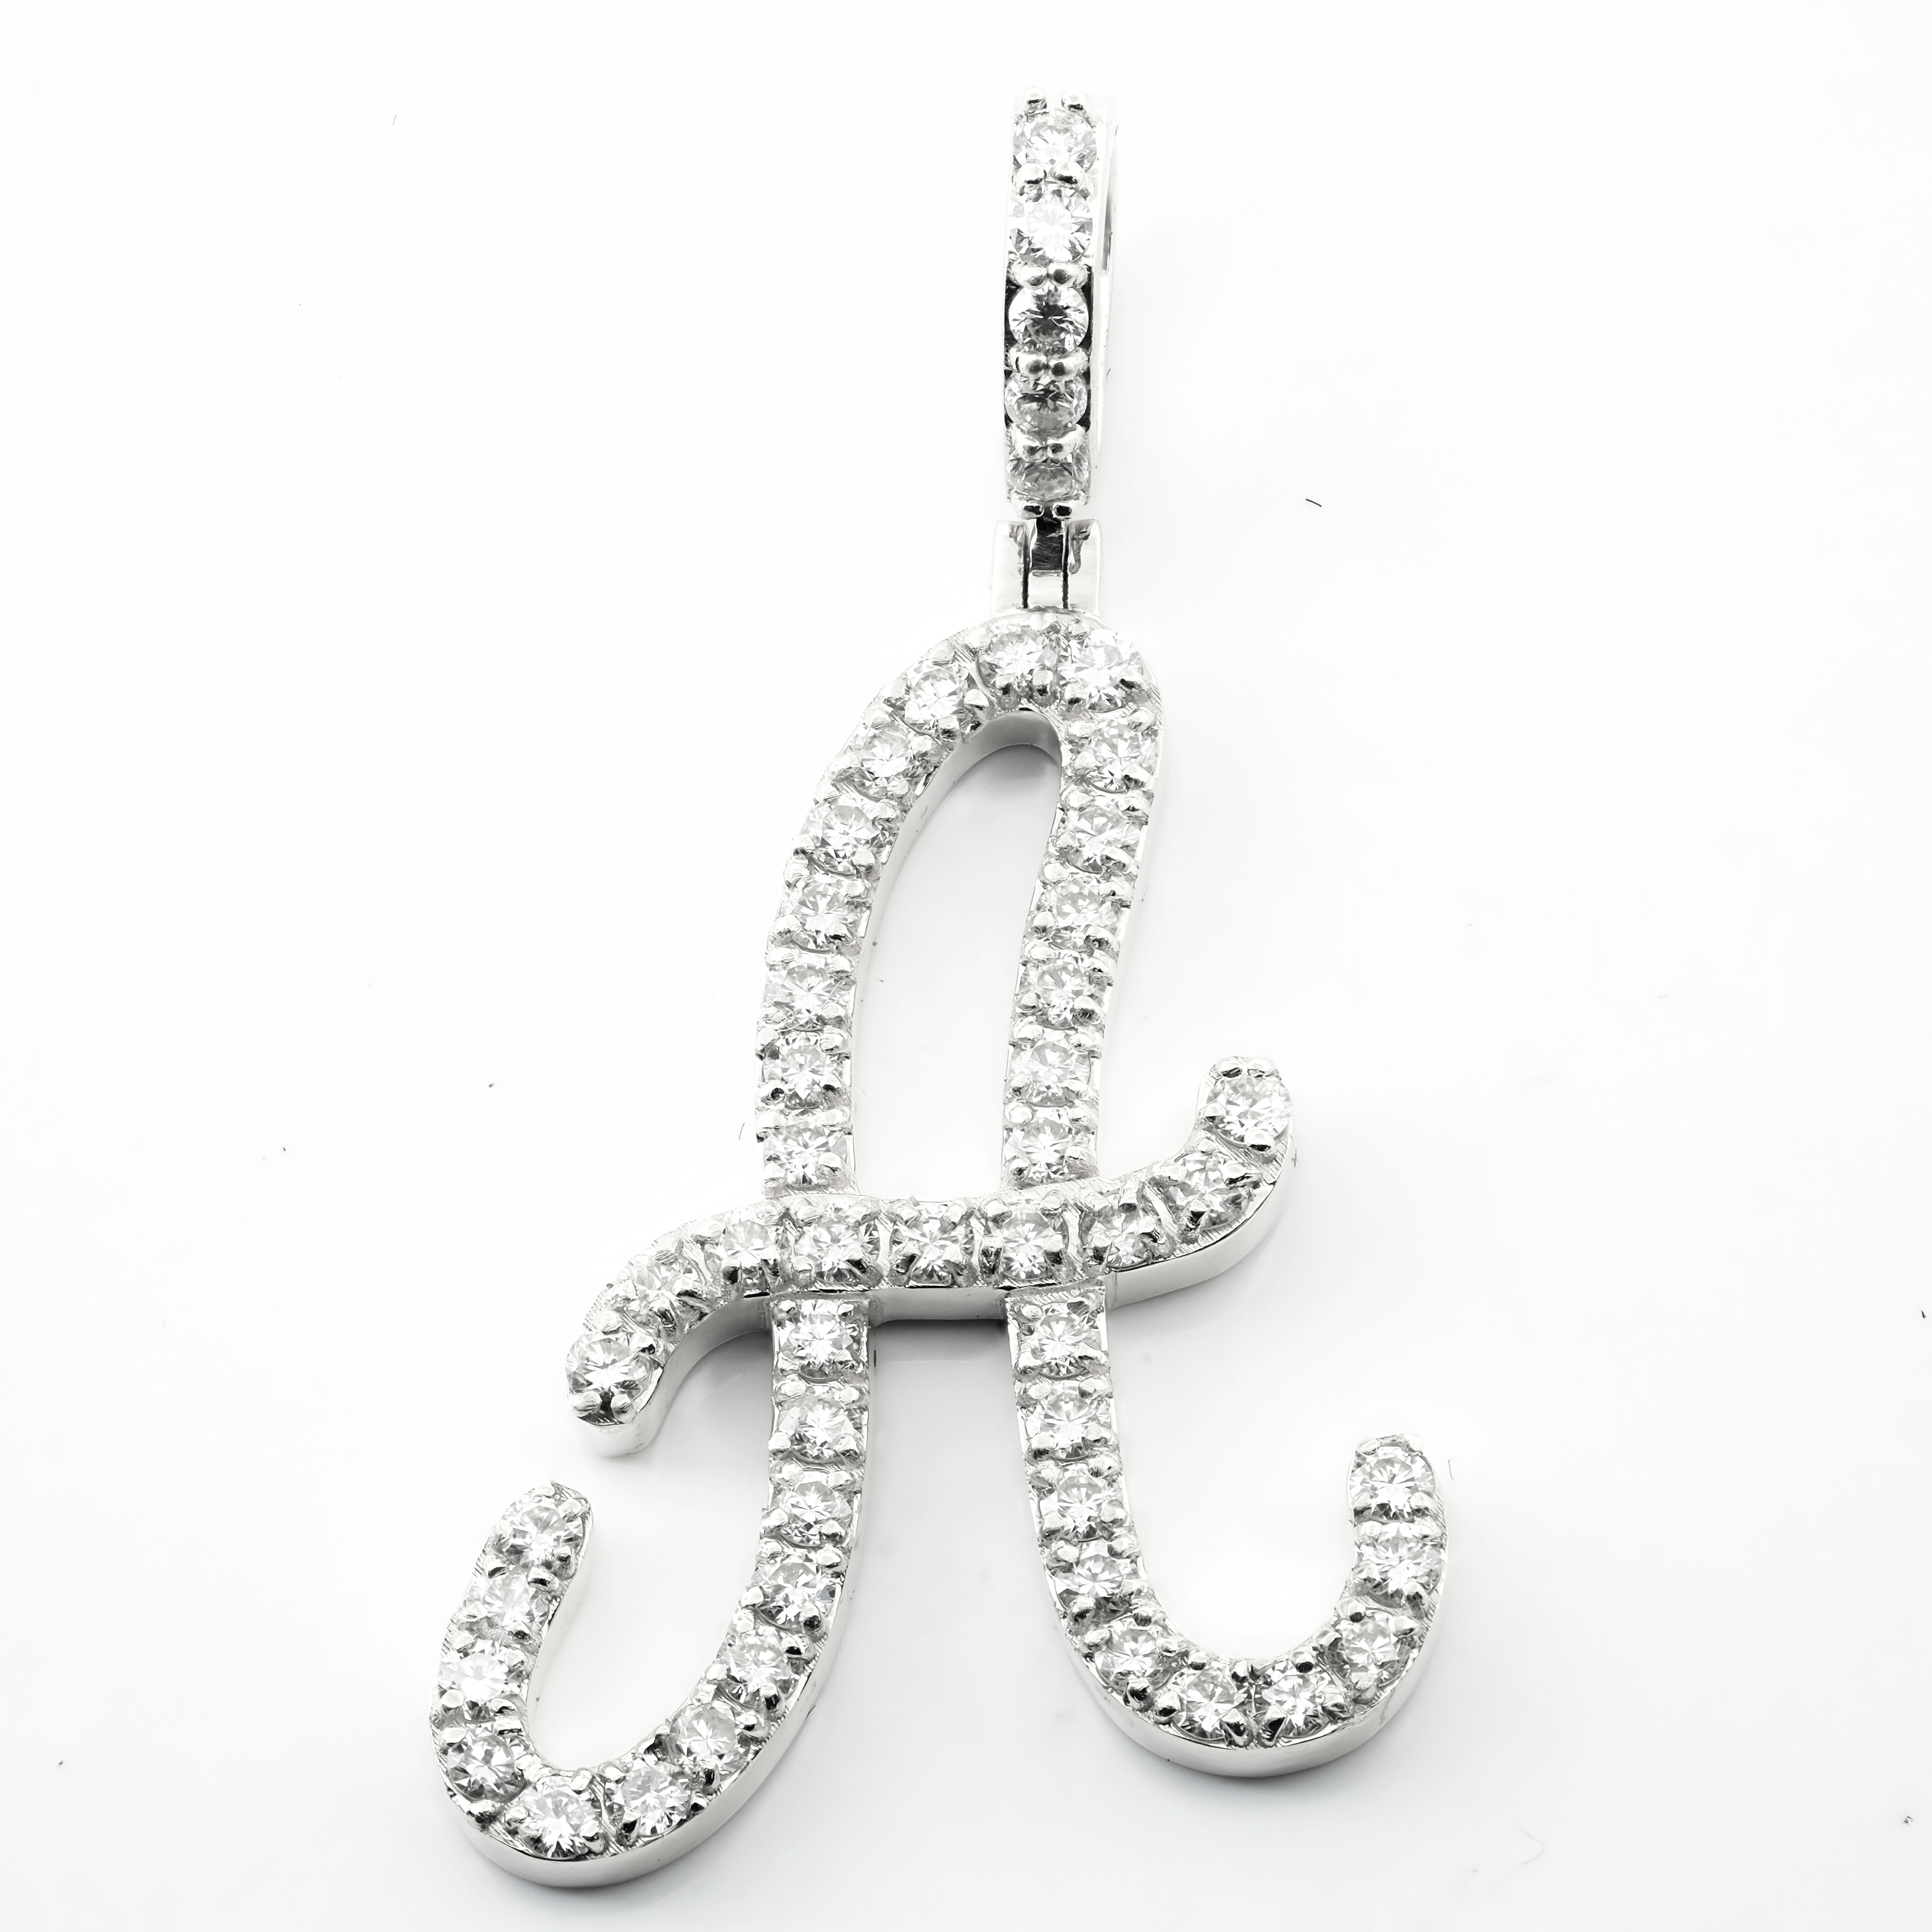 Silver message charm state of georgia necklace Fashion Jewelry FancyCharm